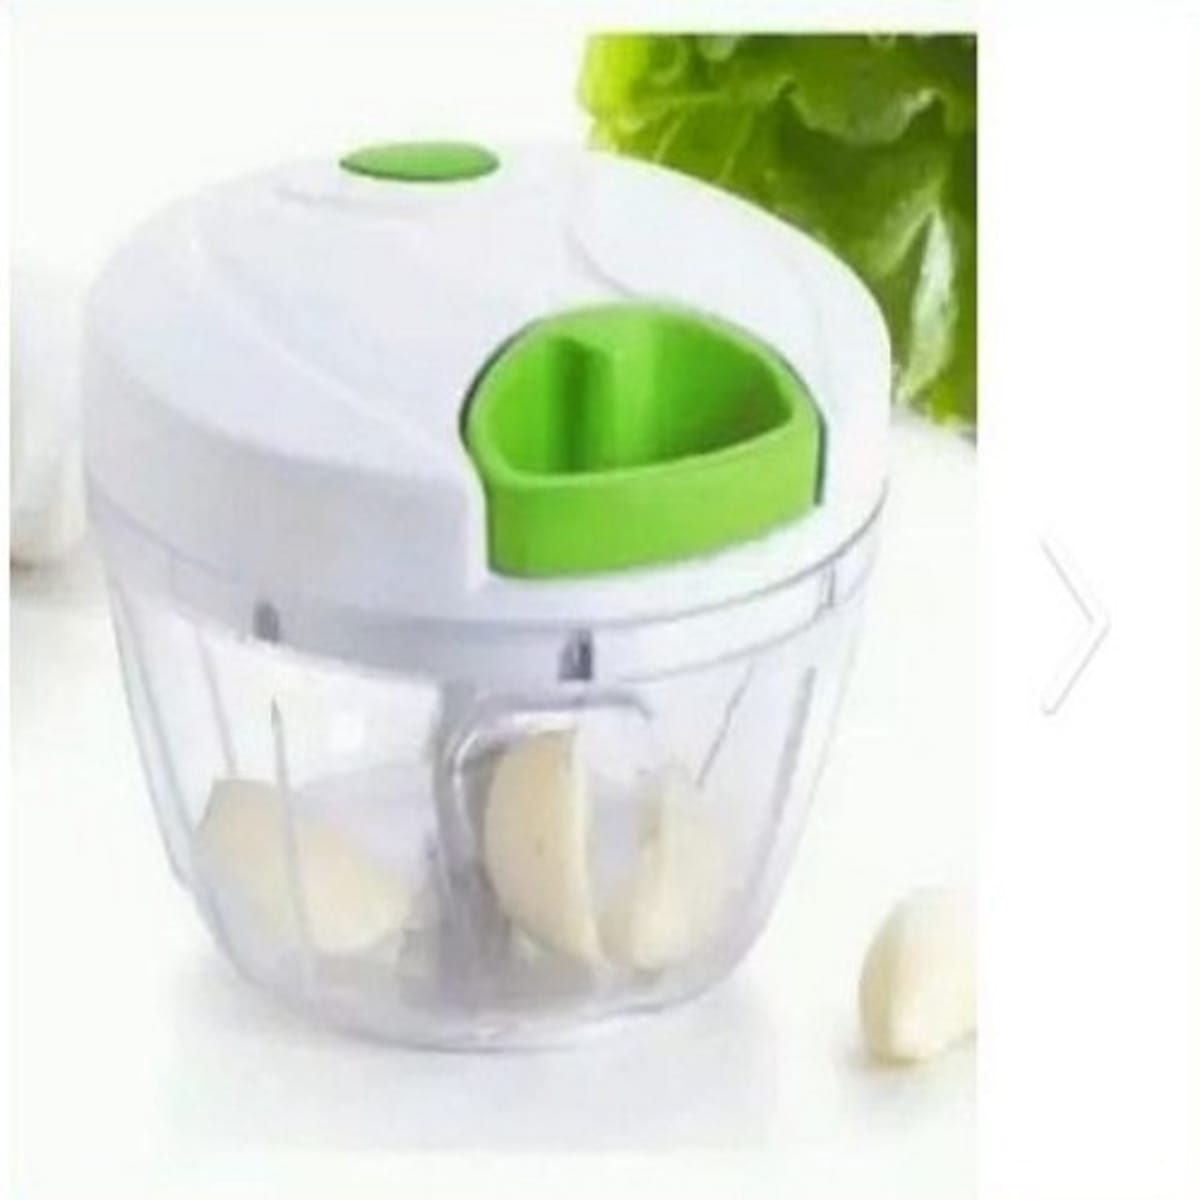 Mini Manual Food Processor Portable Garlic Chopper Grinder Pull String Vegetable Chopper for Veggies, Fruits, Garlic, Onion - White